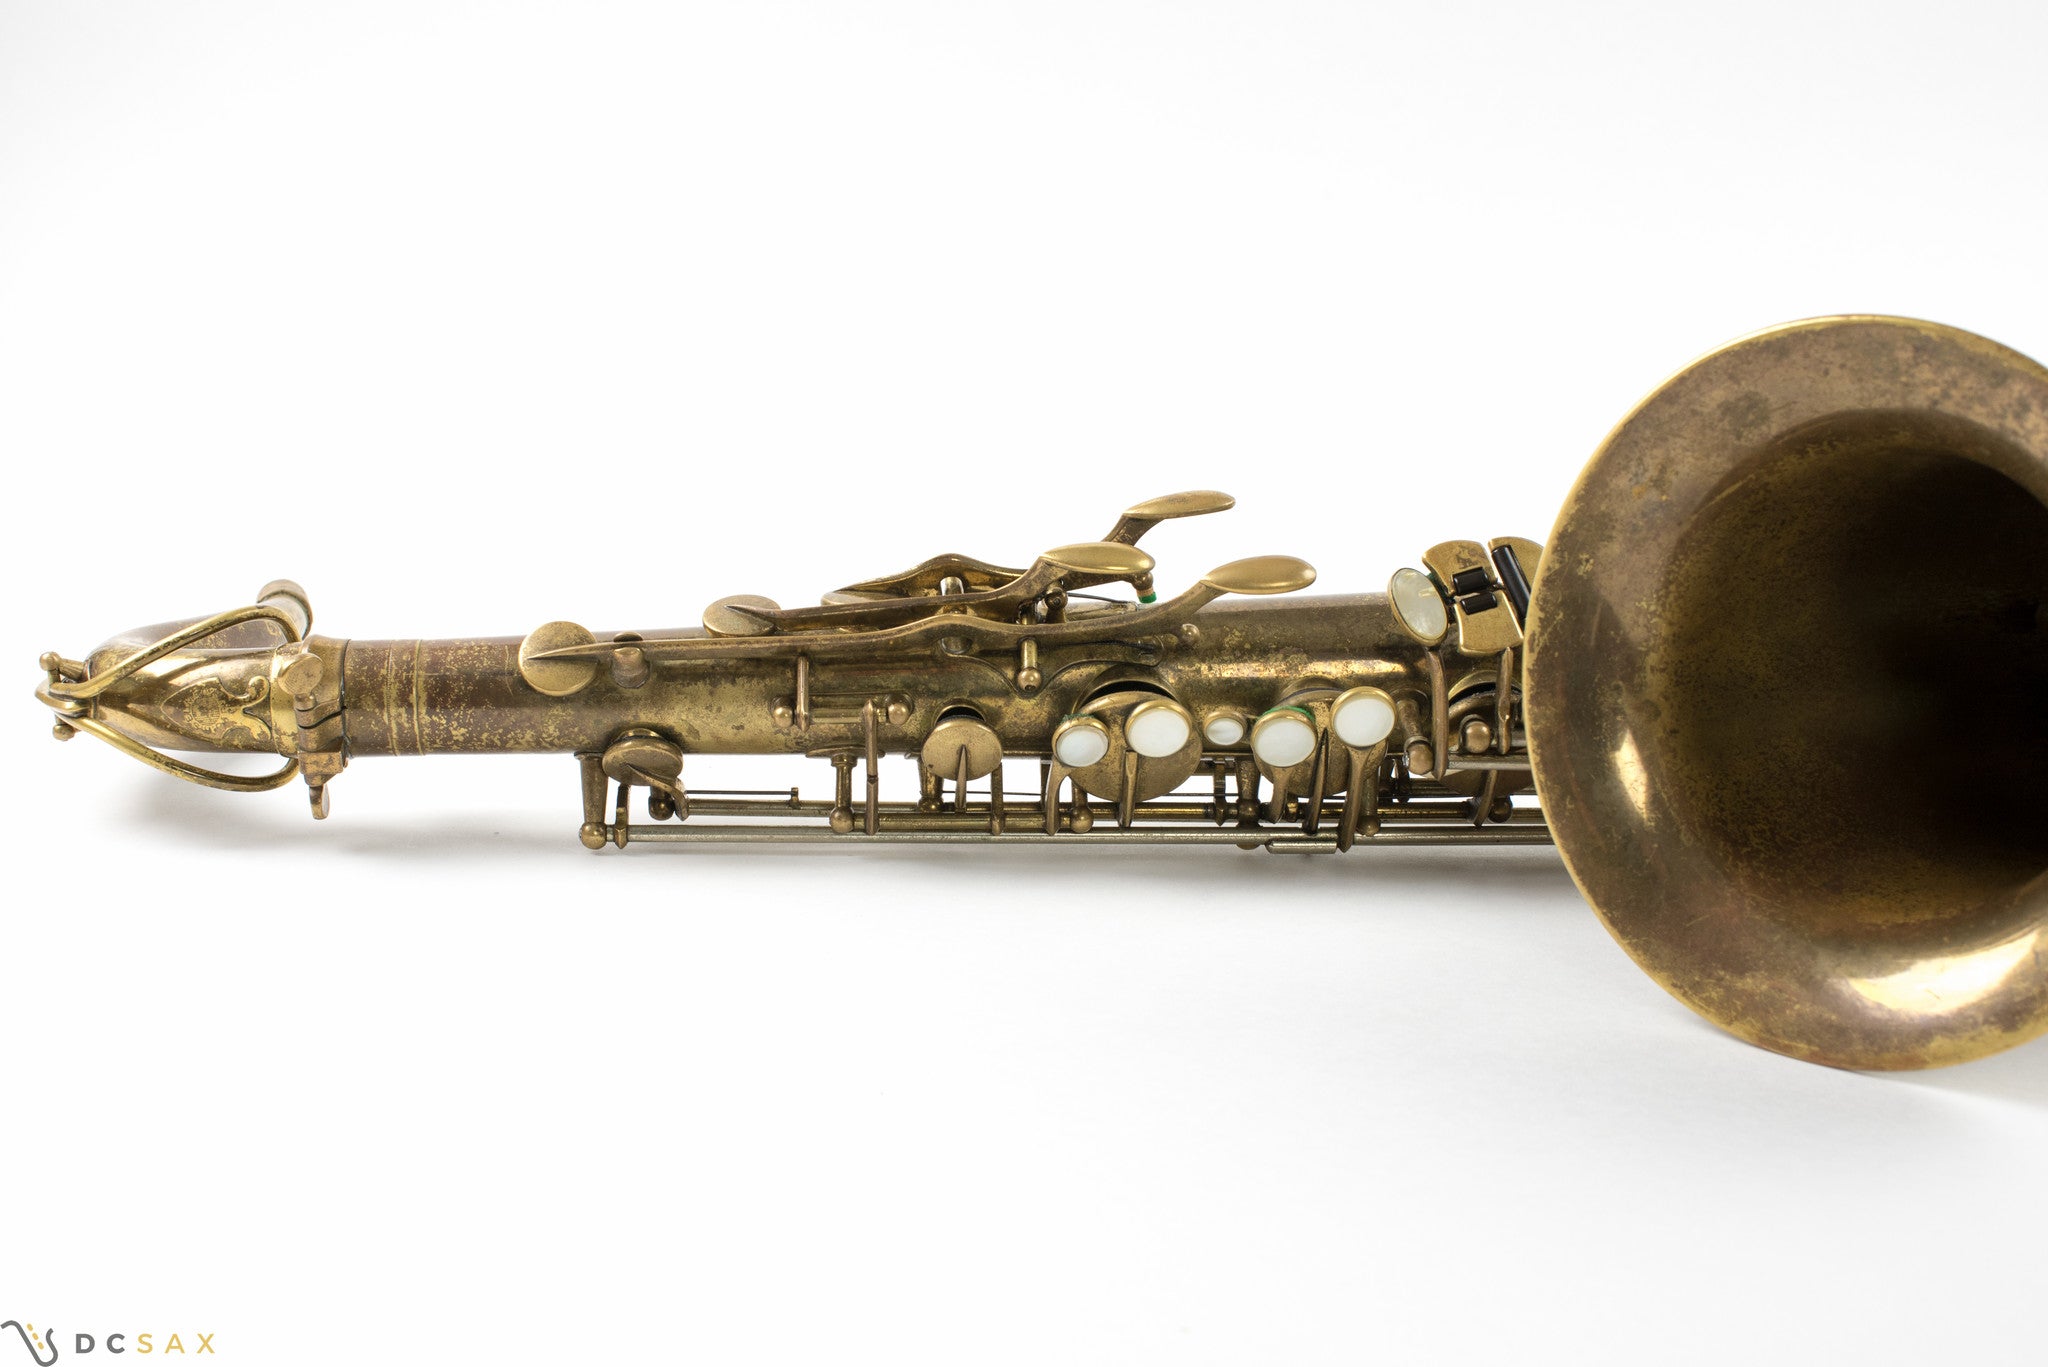 1935 Selmer Balanced Action Tenor Saxophone, s/n 21,xxx